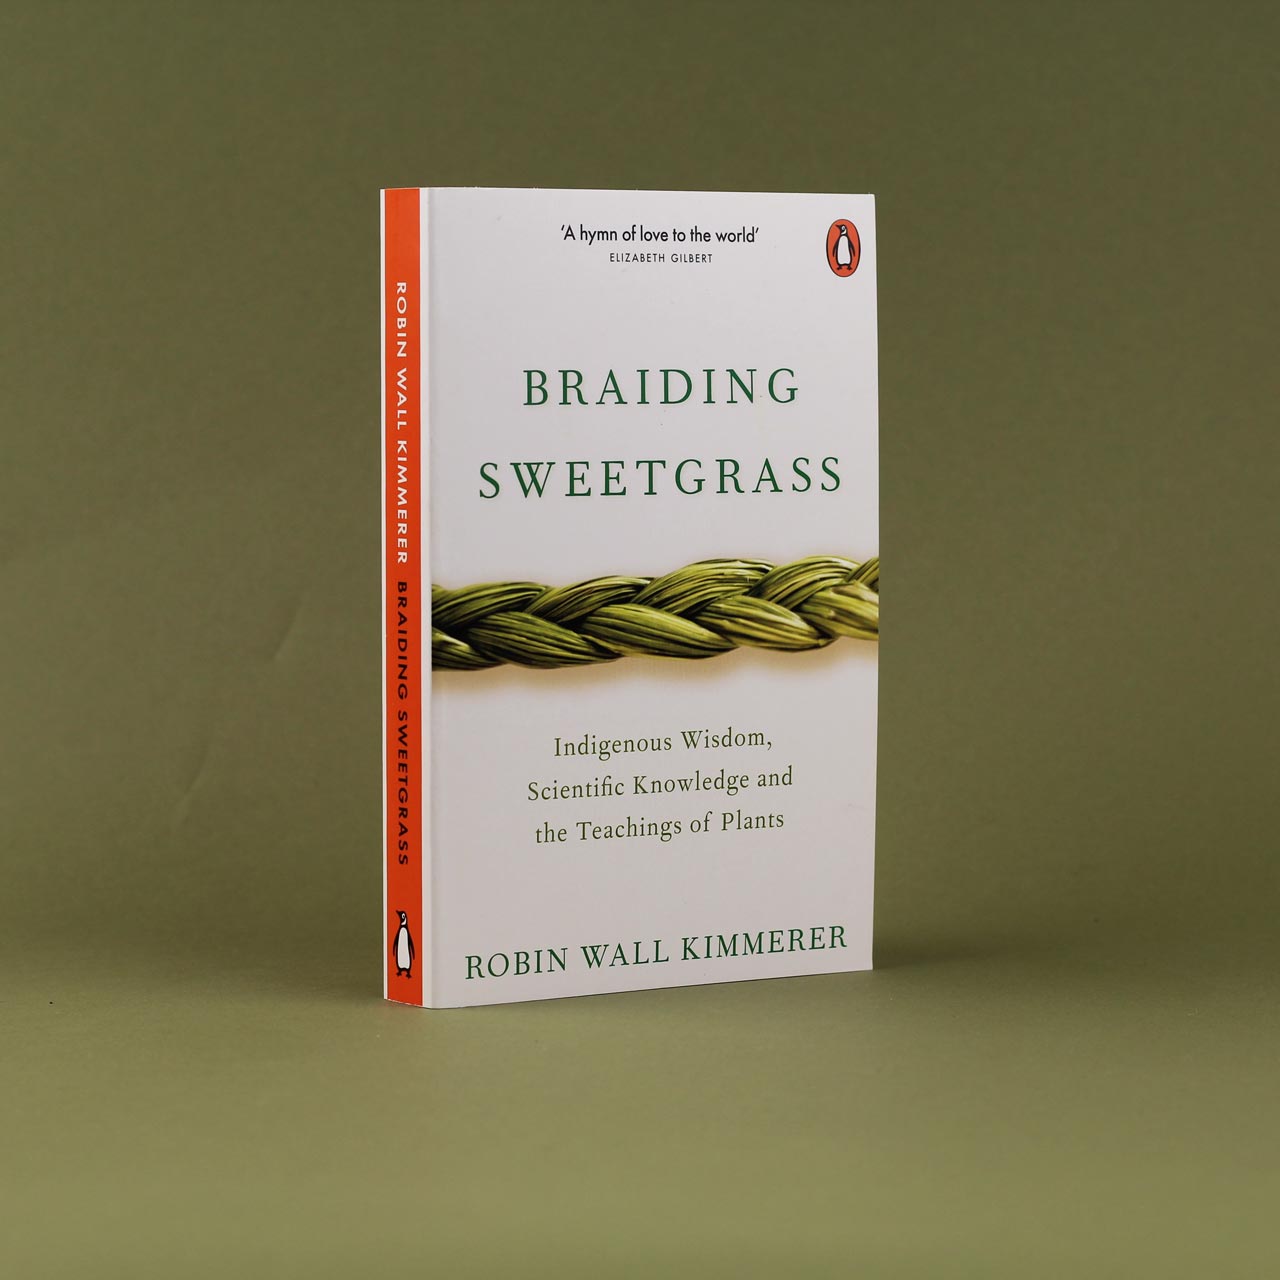 Braiding Sweet Grass by Robin Wall Kimmerer